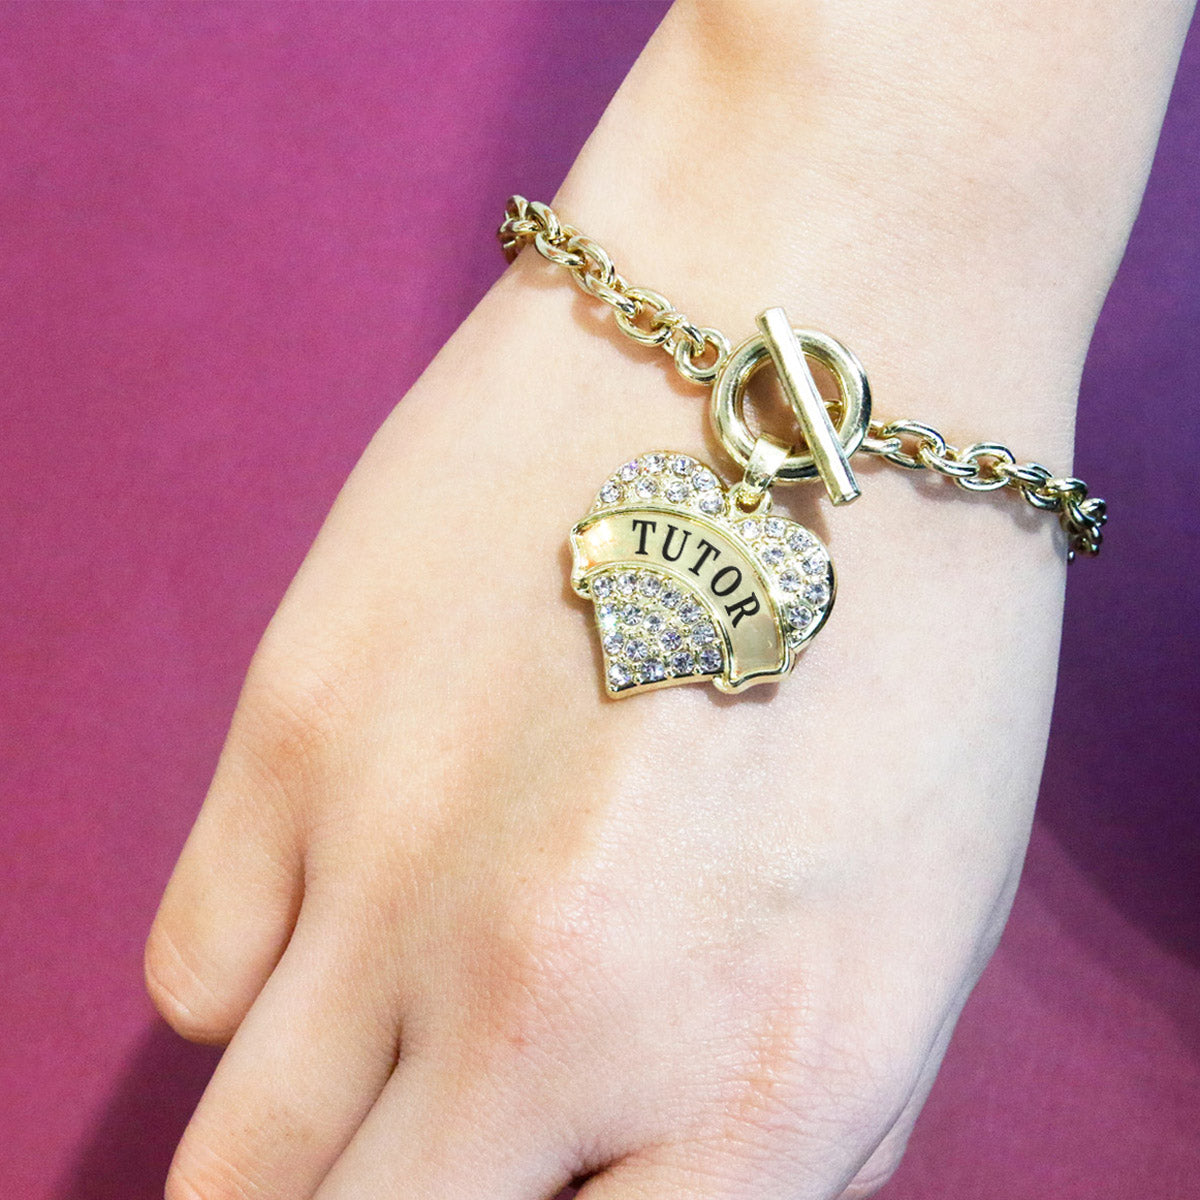 Gold Tutor Pave Heart Charm Toggle Bracelet